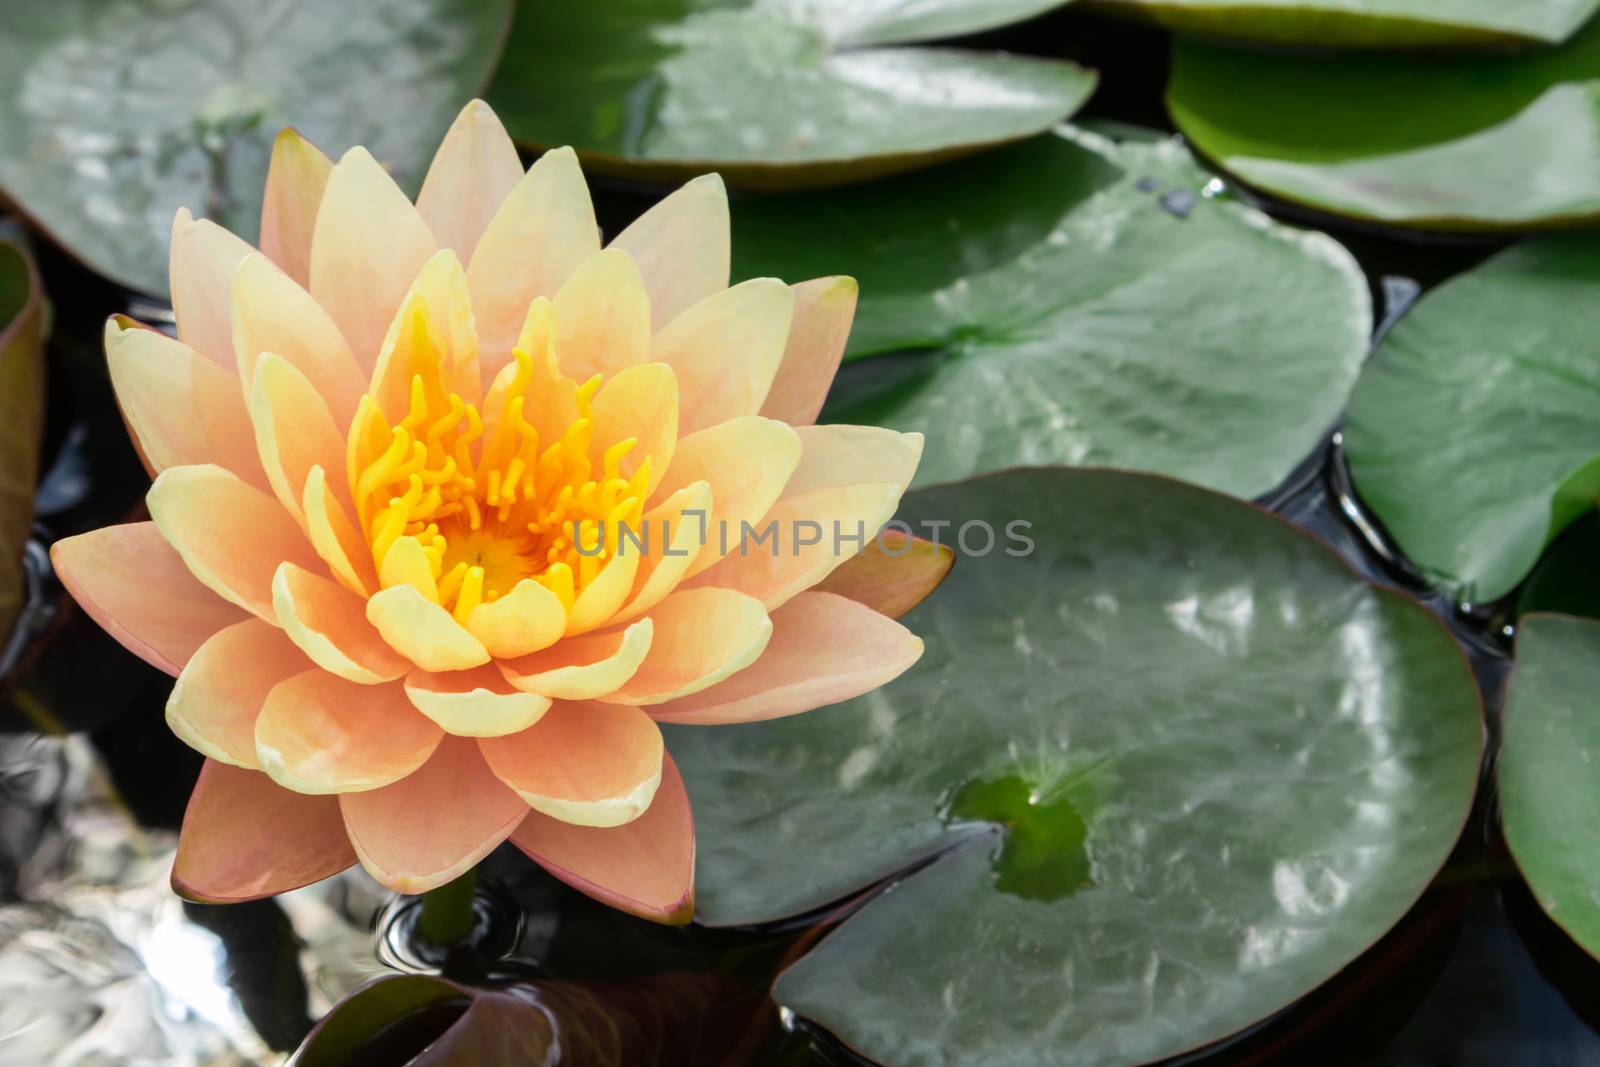 Closeup of beautyful old rose lotus flower by pt.pongsak@gmail.com